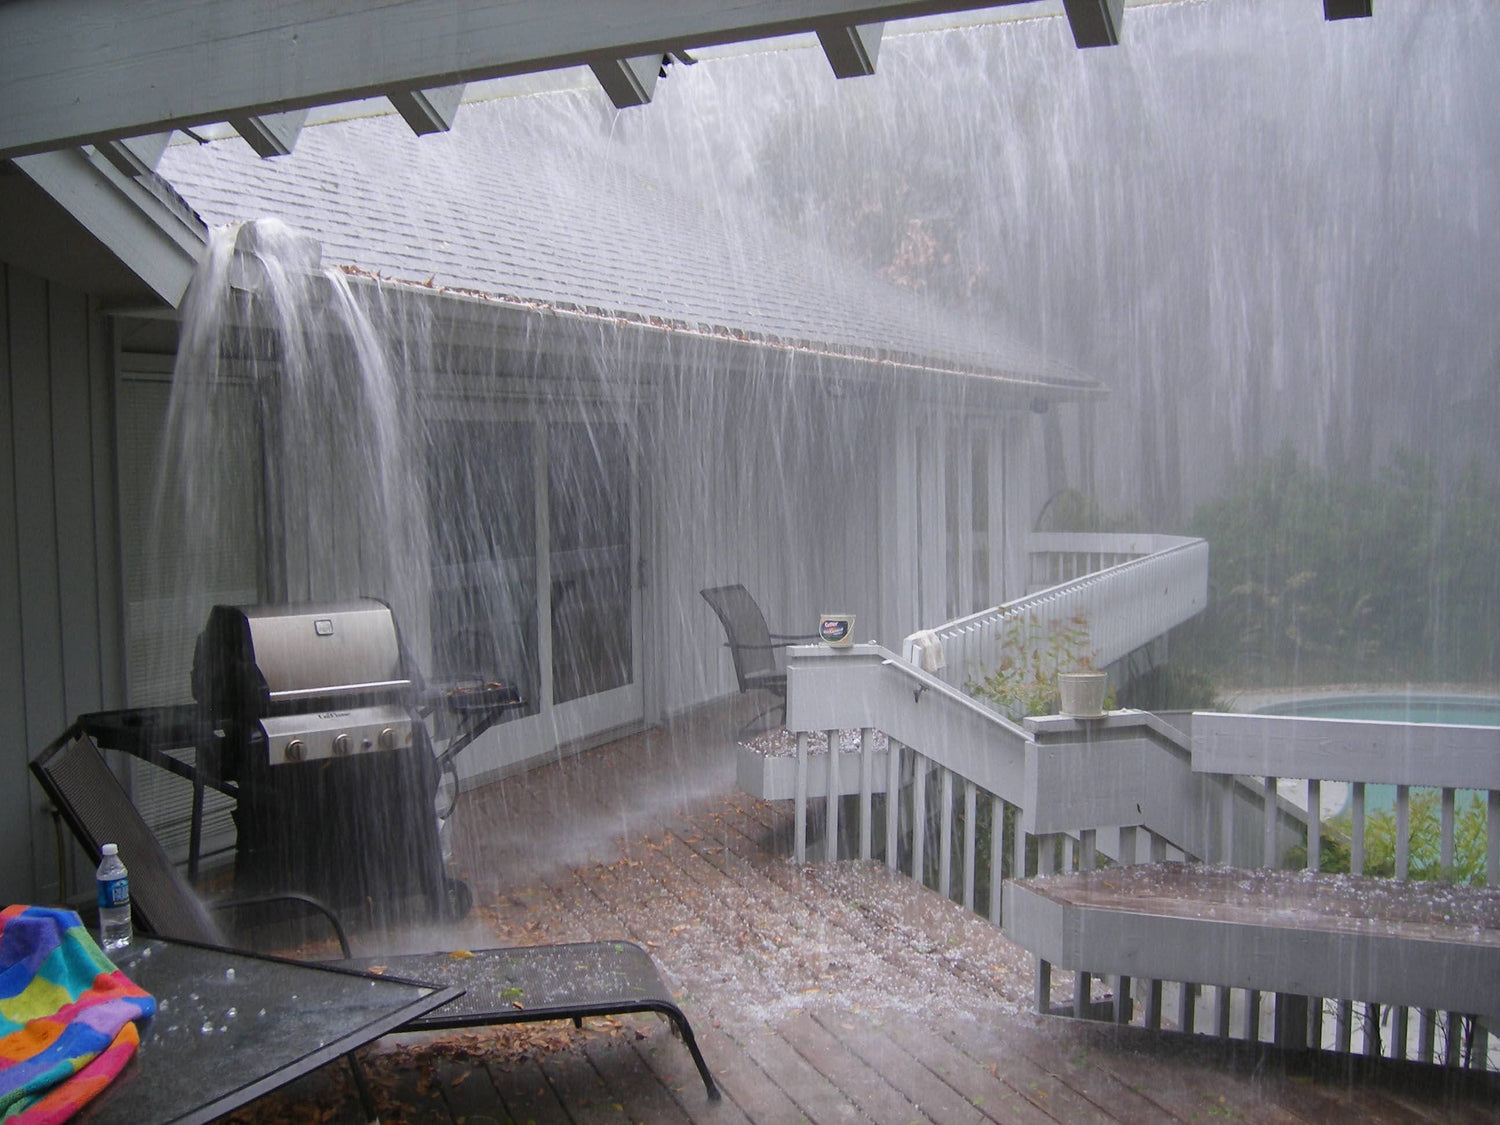 rain water overflowing a clogged gutter splashing down on deck furniture